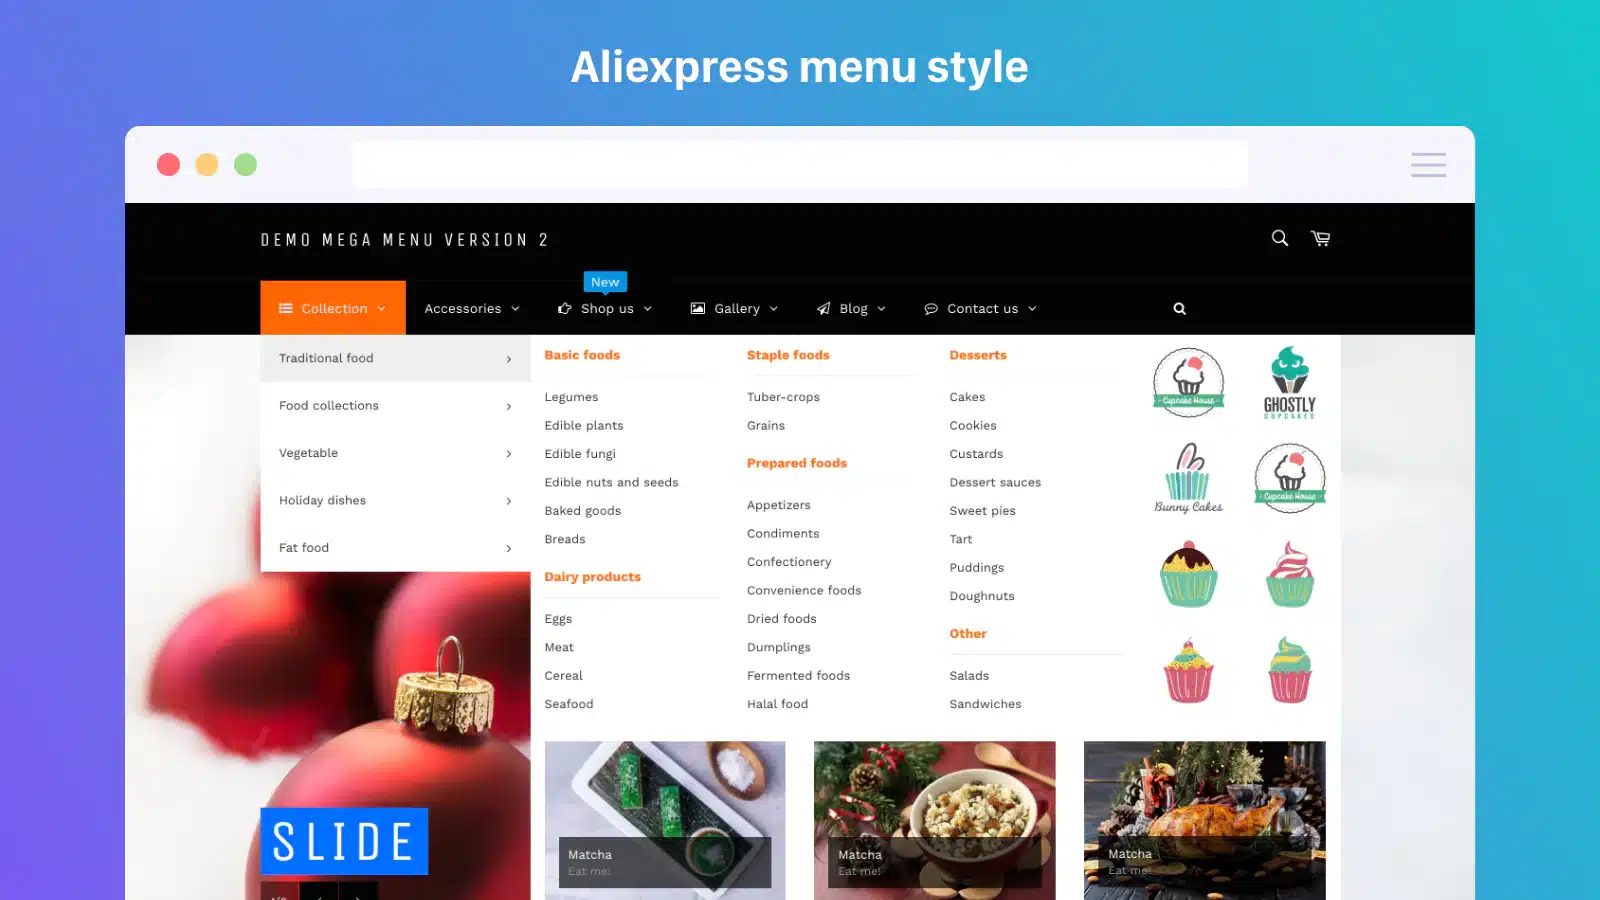 globo-mega-menu-navigation-aliexpress-menu-style